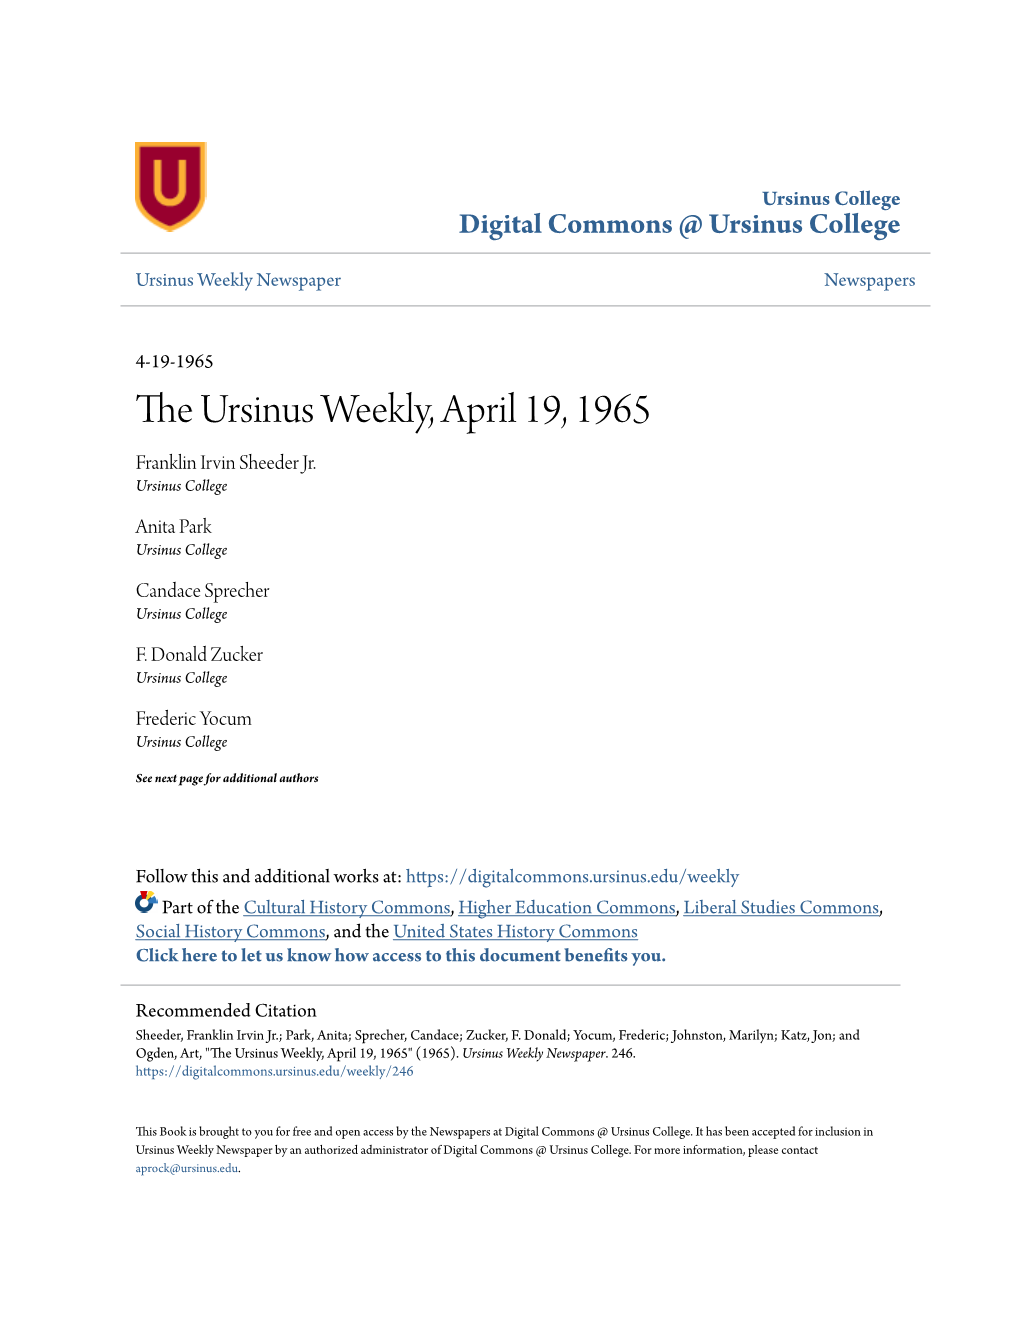 The Ursinus Weekly, April 19, 1965